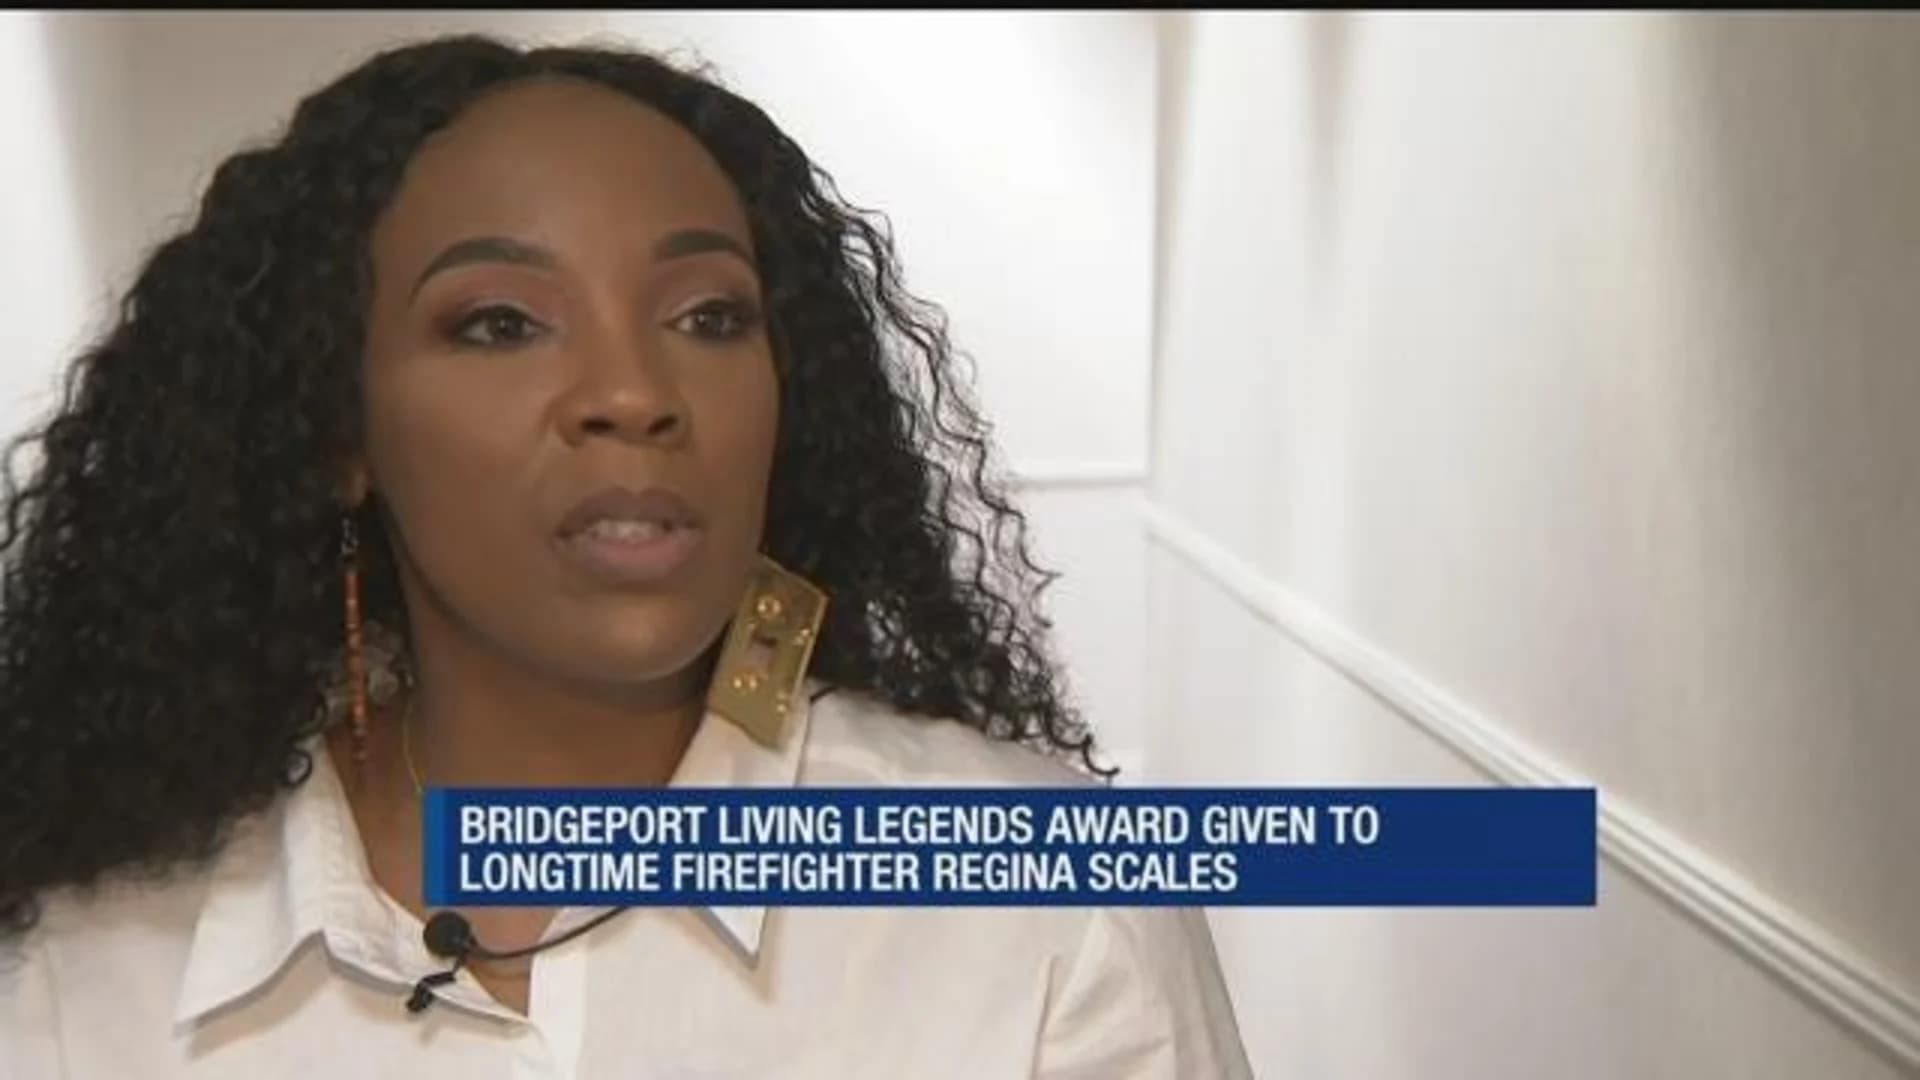 Bridgeport bestows Living Legend award to firefighter